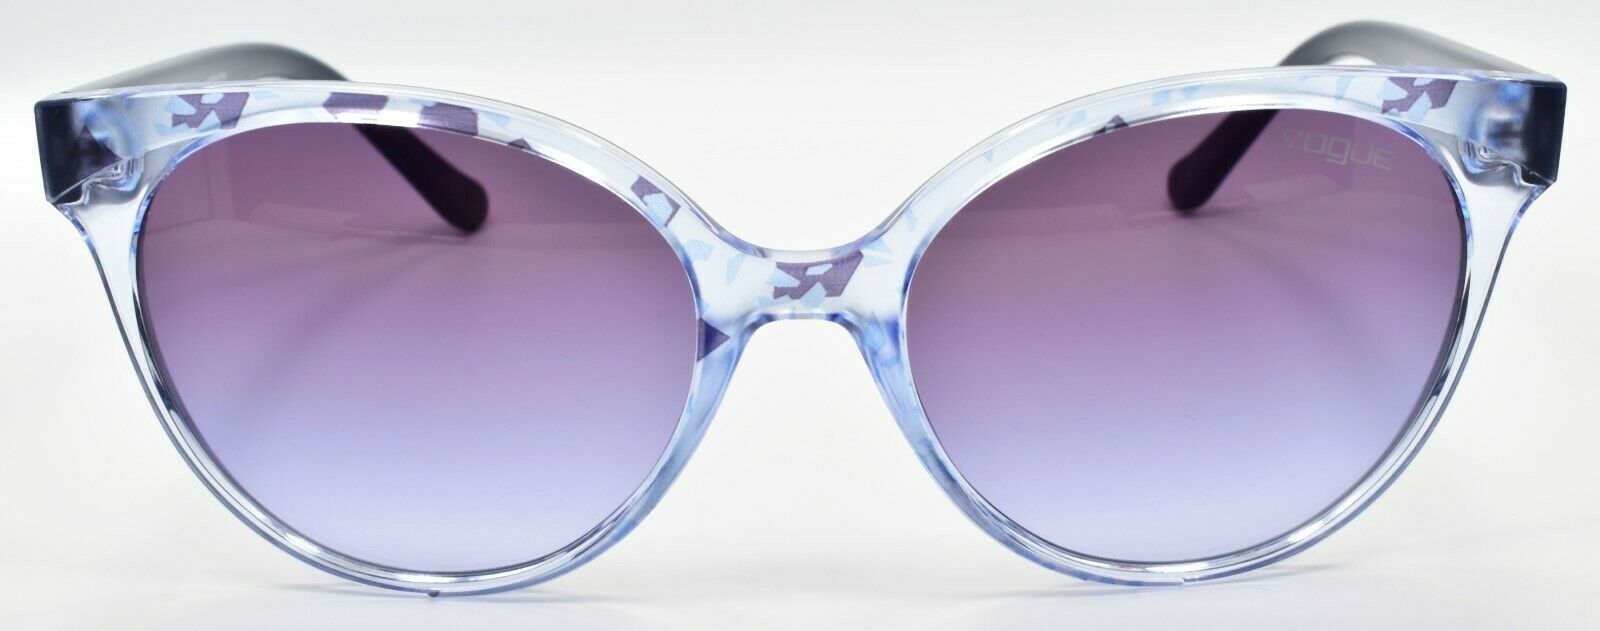 2-Vogue VO5246-S 27274Q Women's Sunglasses Light Blue Textured / Violet Gradient-8056597076364-IKSpecs